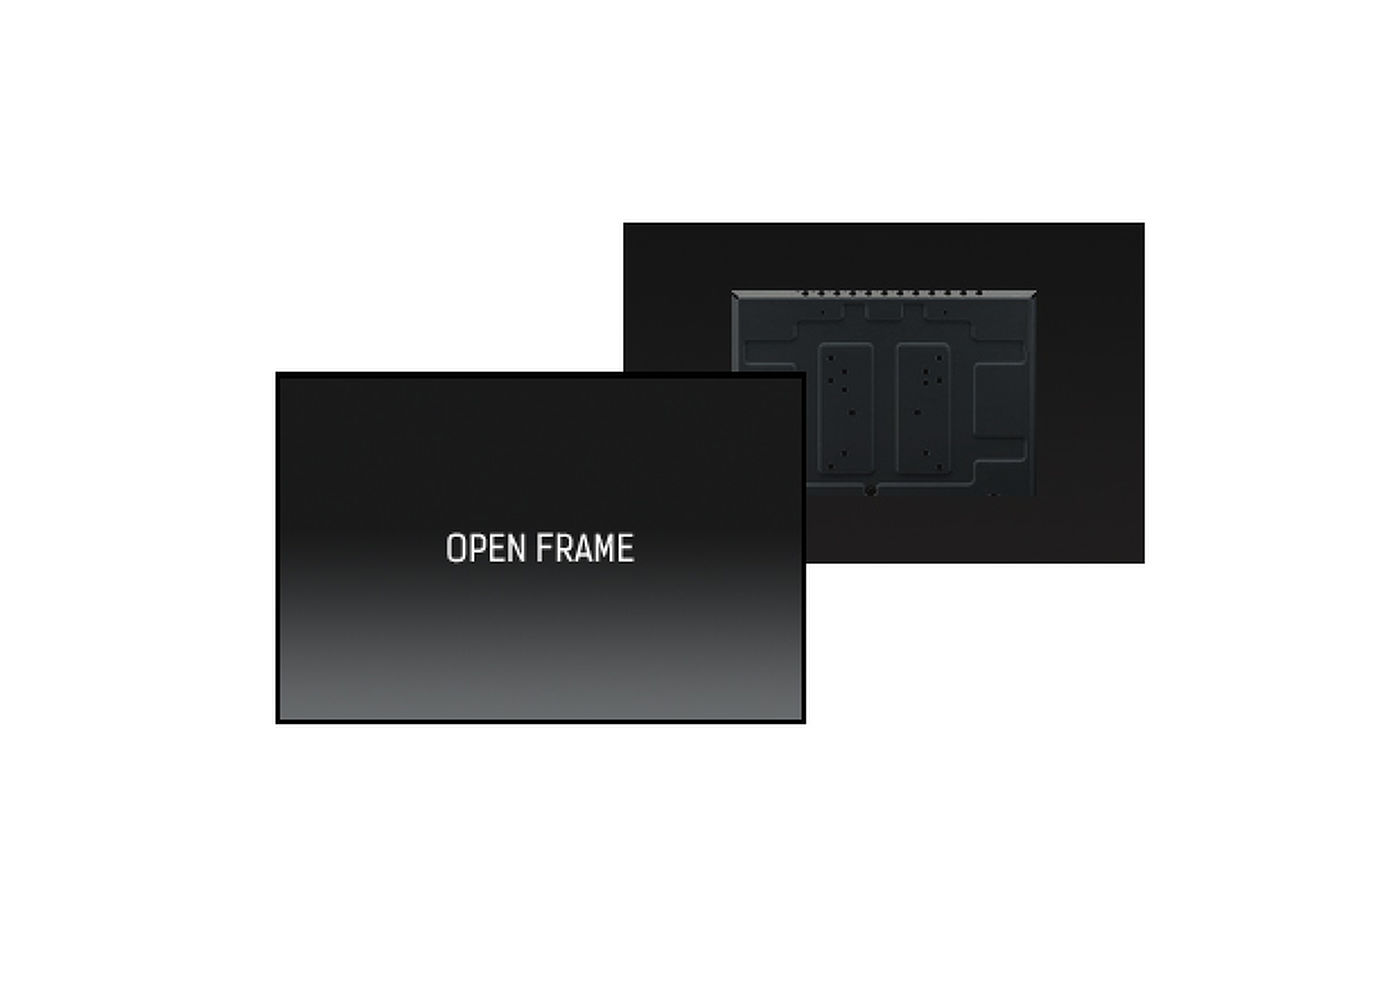 Open Frame (rahmenlose Einbaugeräte)